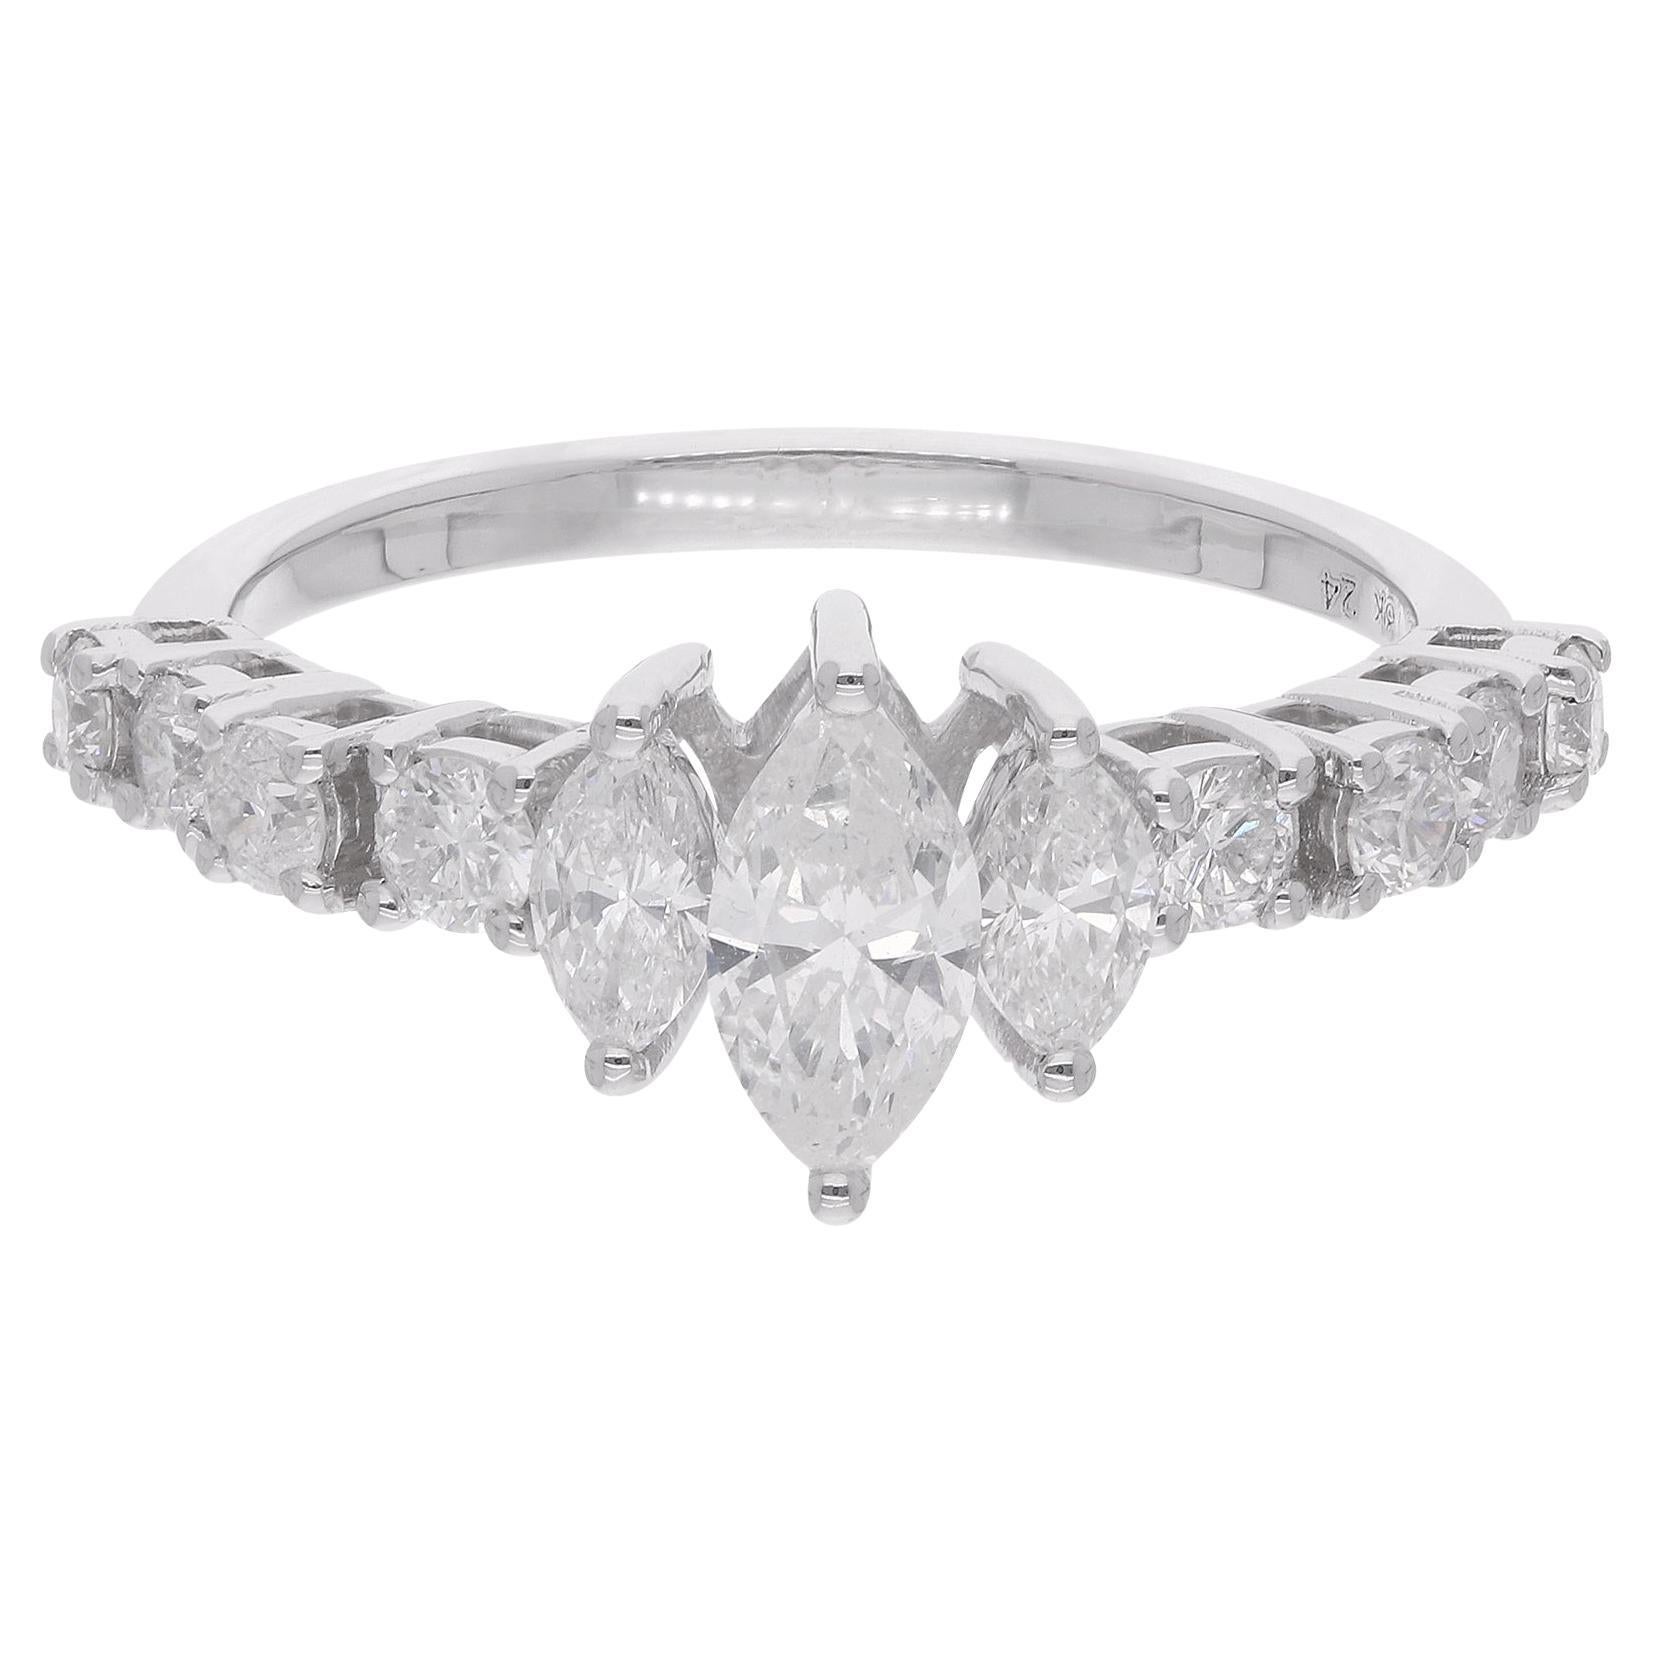 1.02 Carat Marquise & Round Diamond Ring 14 Karat White Gold Handmade Jewelry For Sale